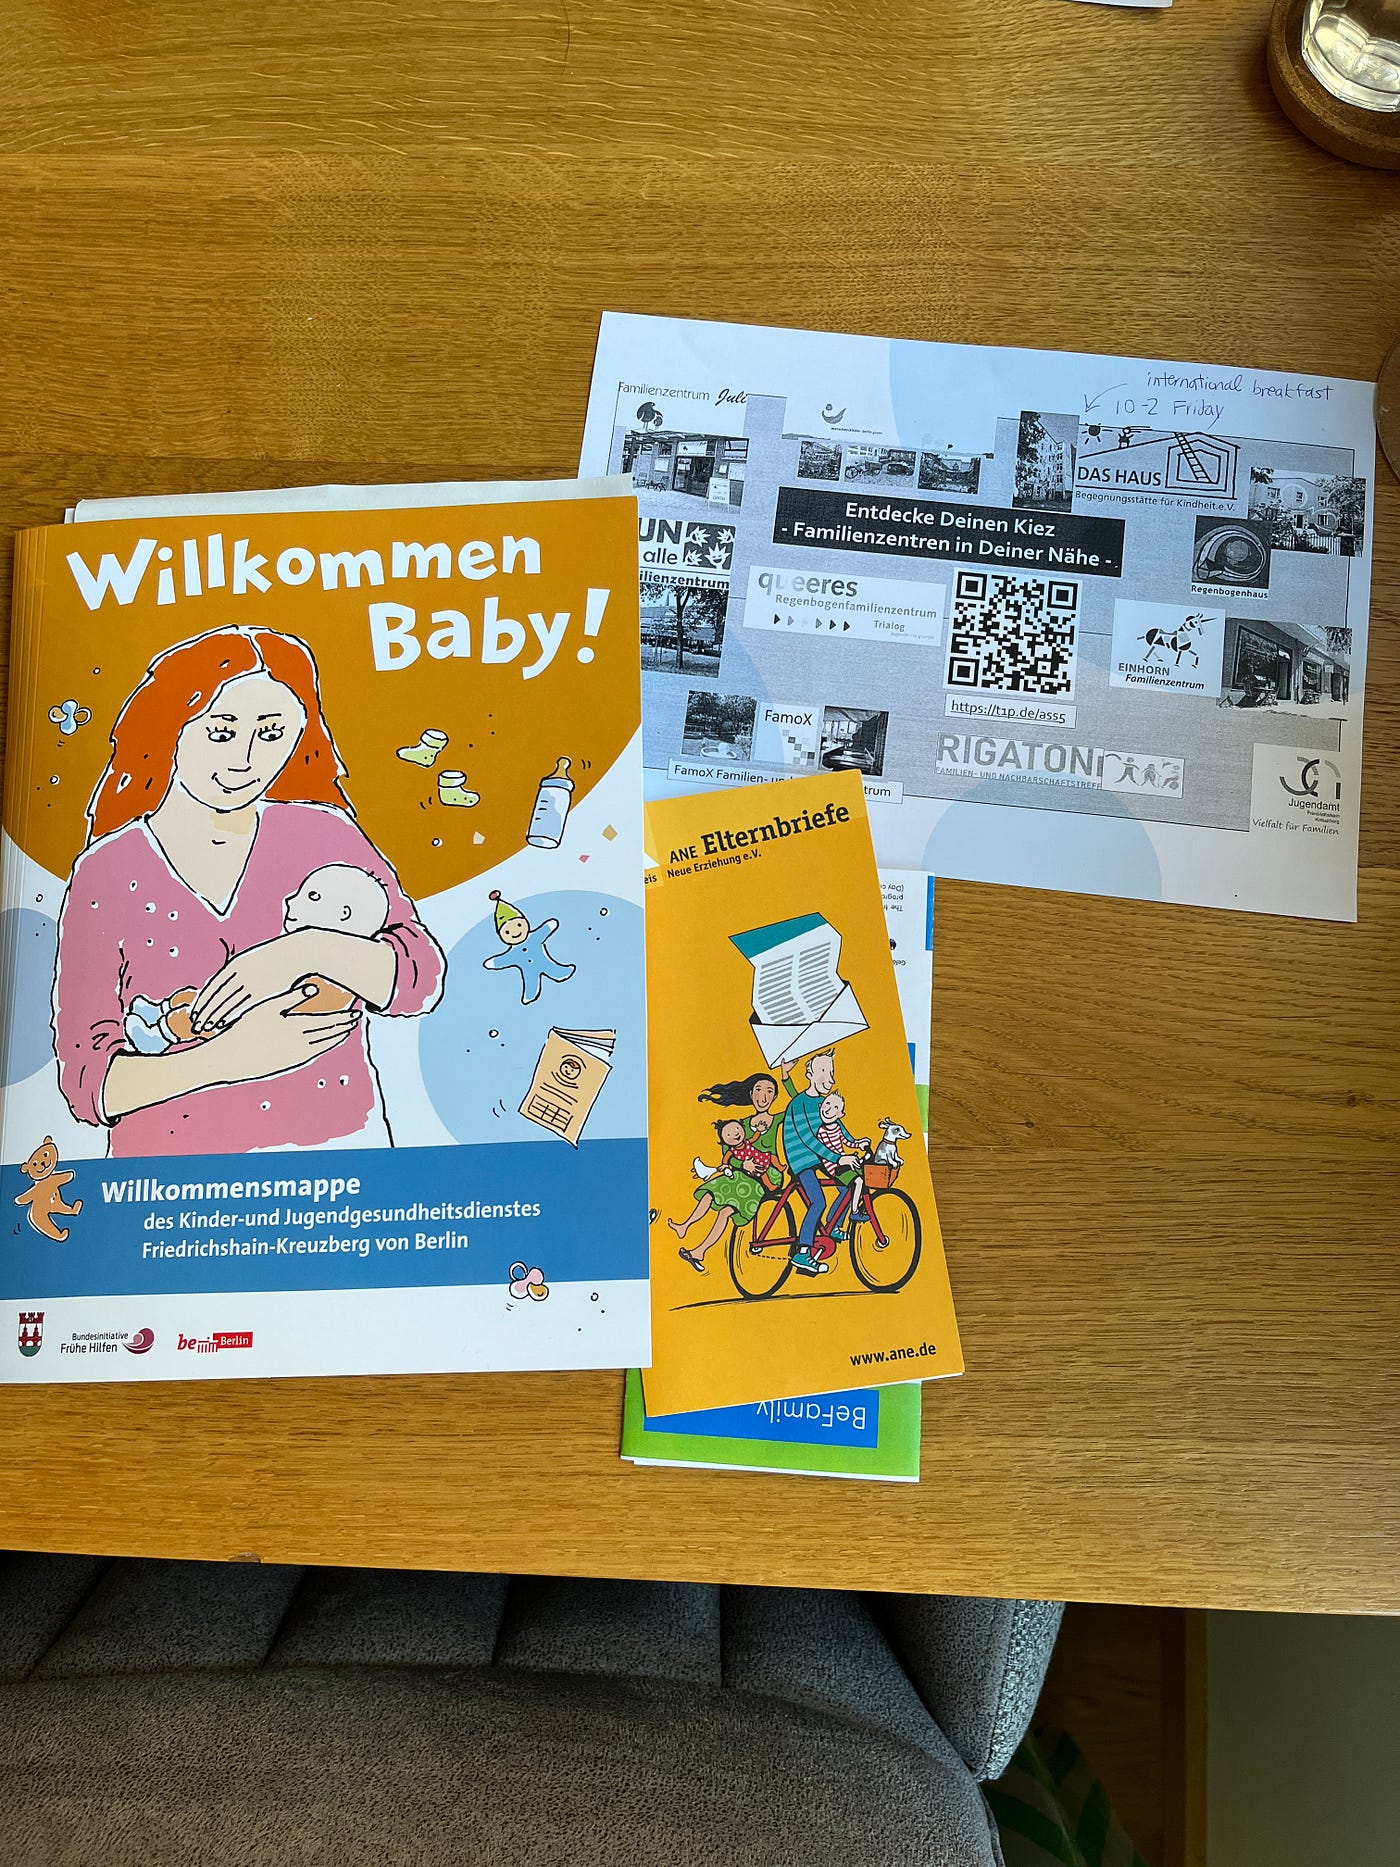 Umbilical Cord Care On Newborns - Midwife in Berlin